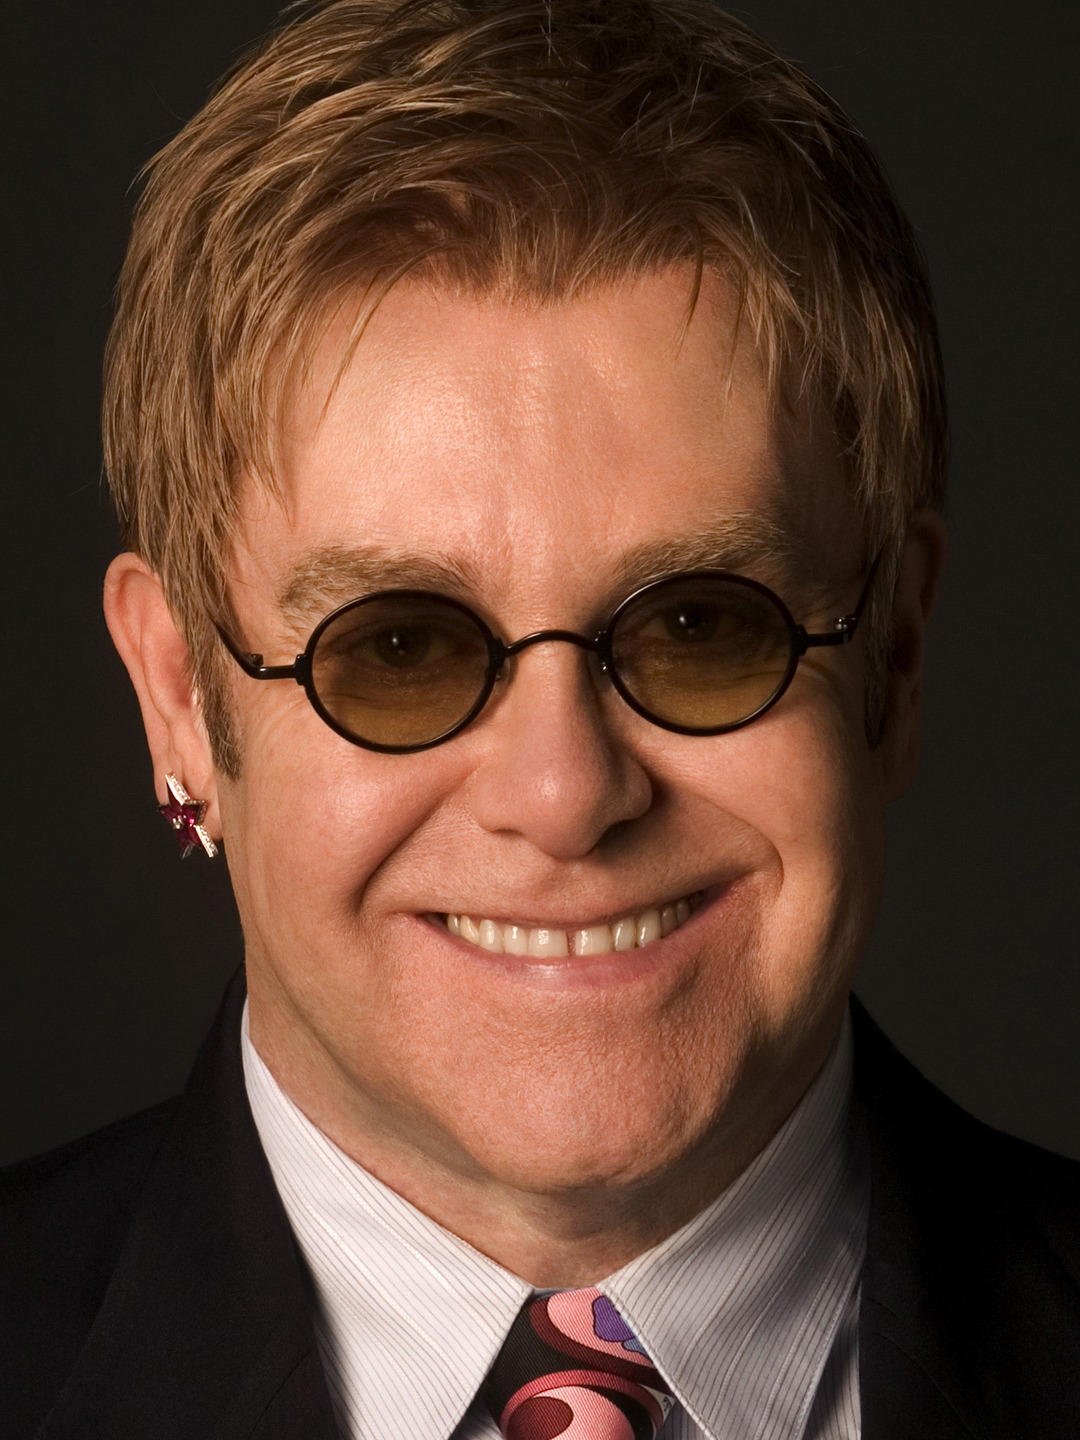 Elton John personal traits